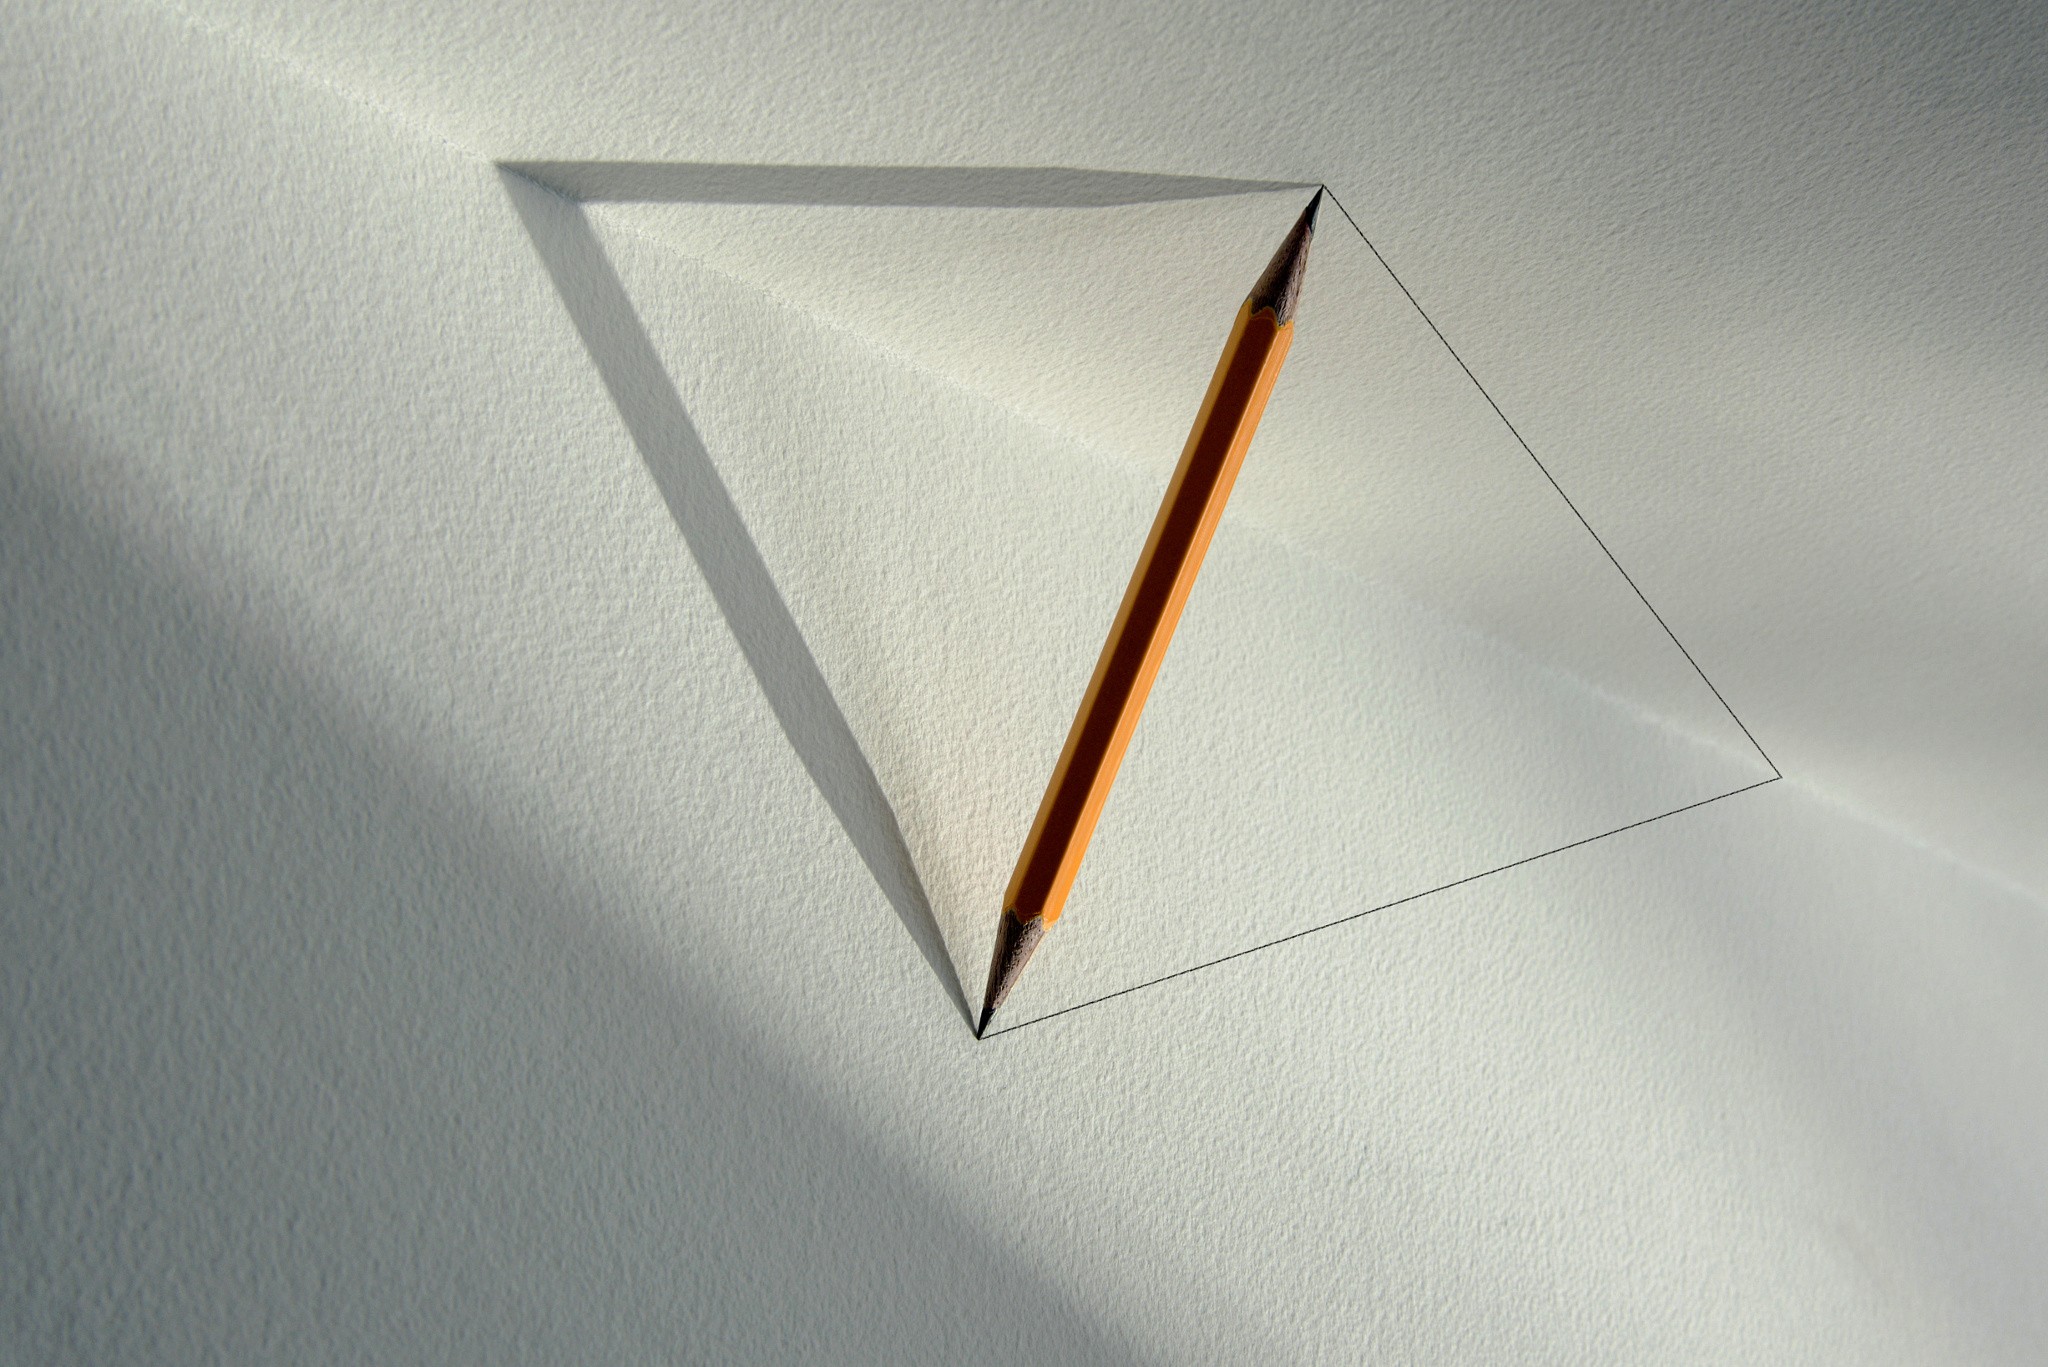 General 2048x1367 photography pencils shadow triangle geometric figures minimalism